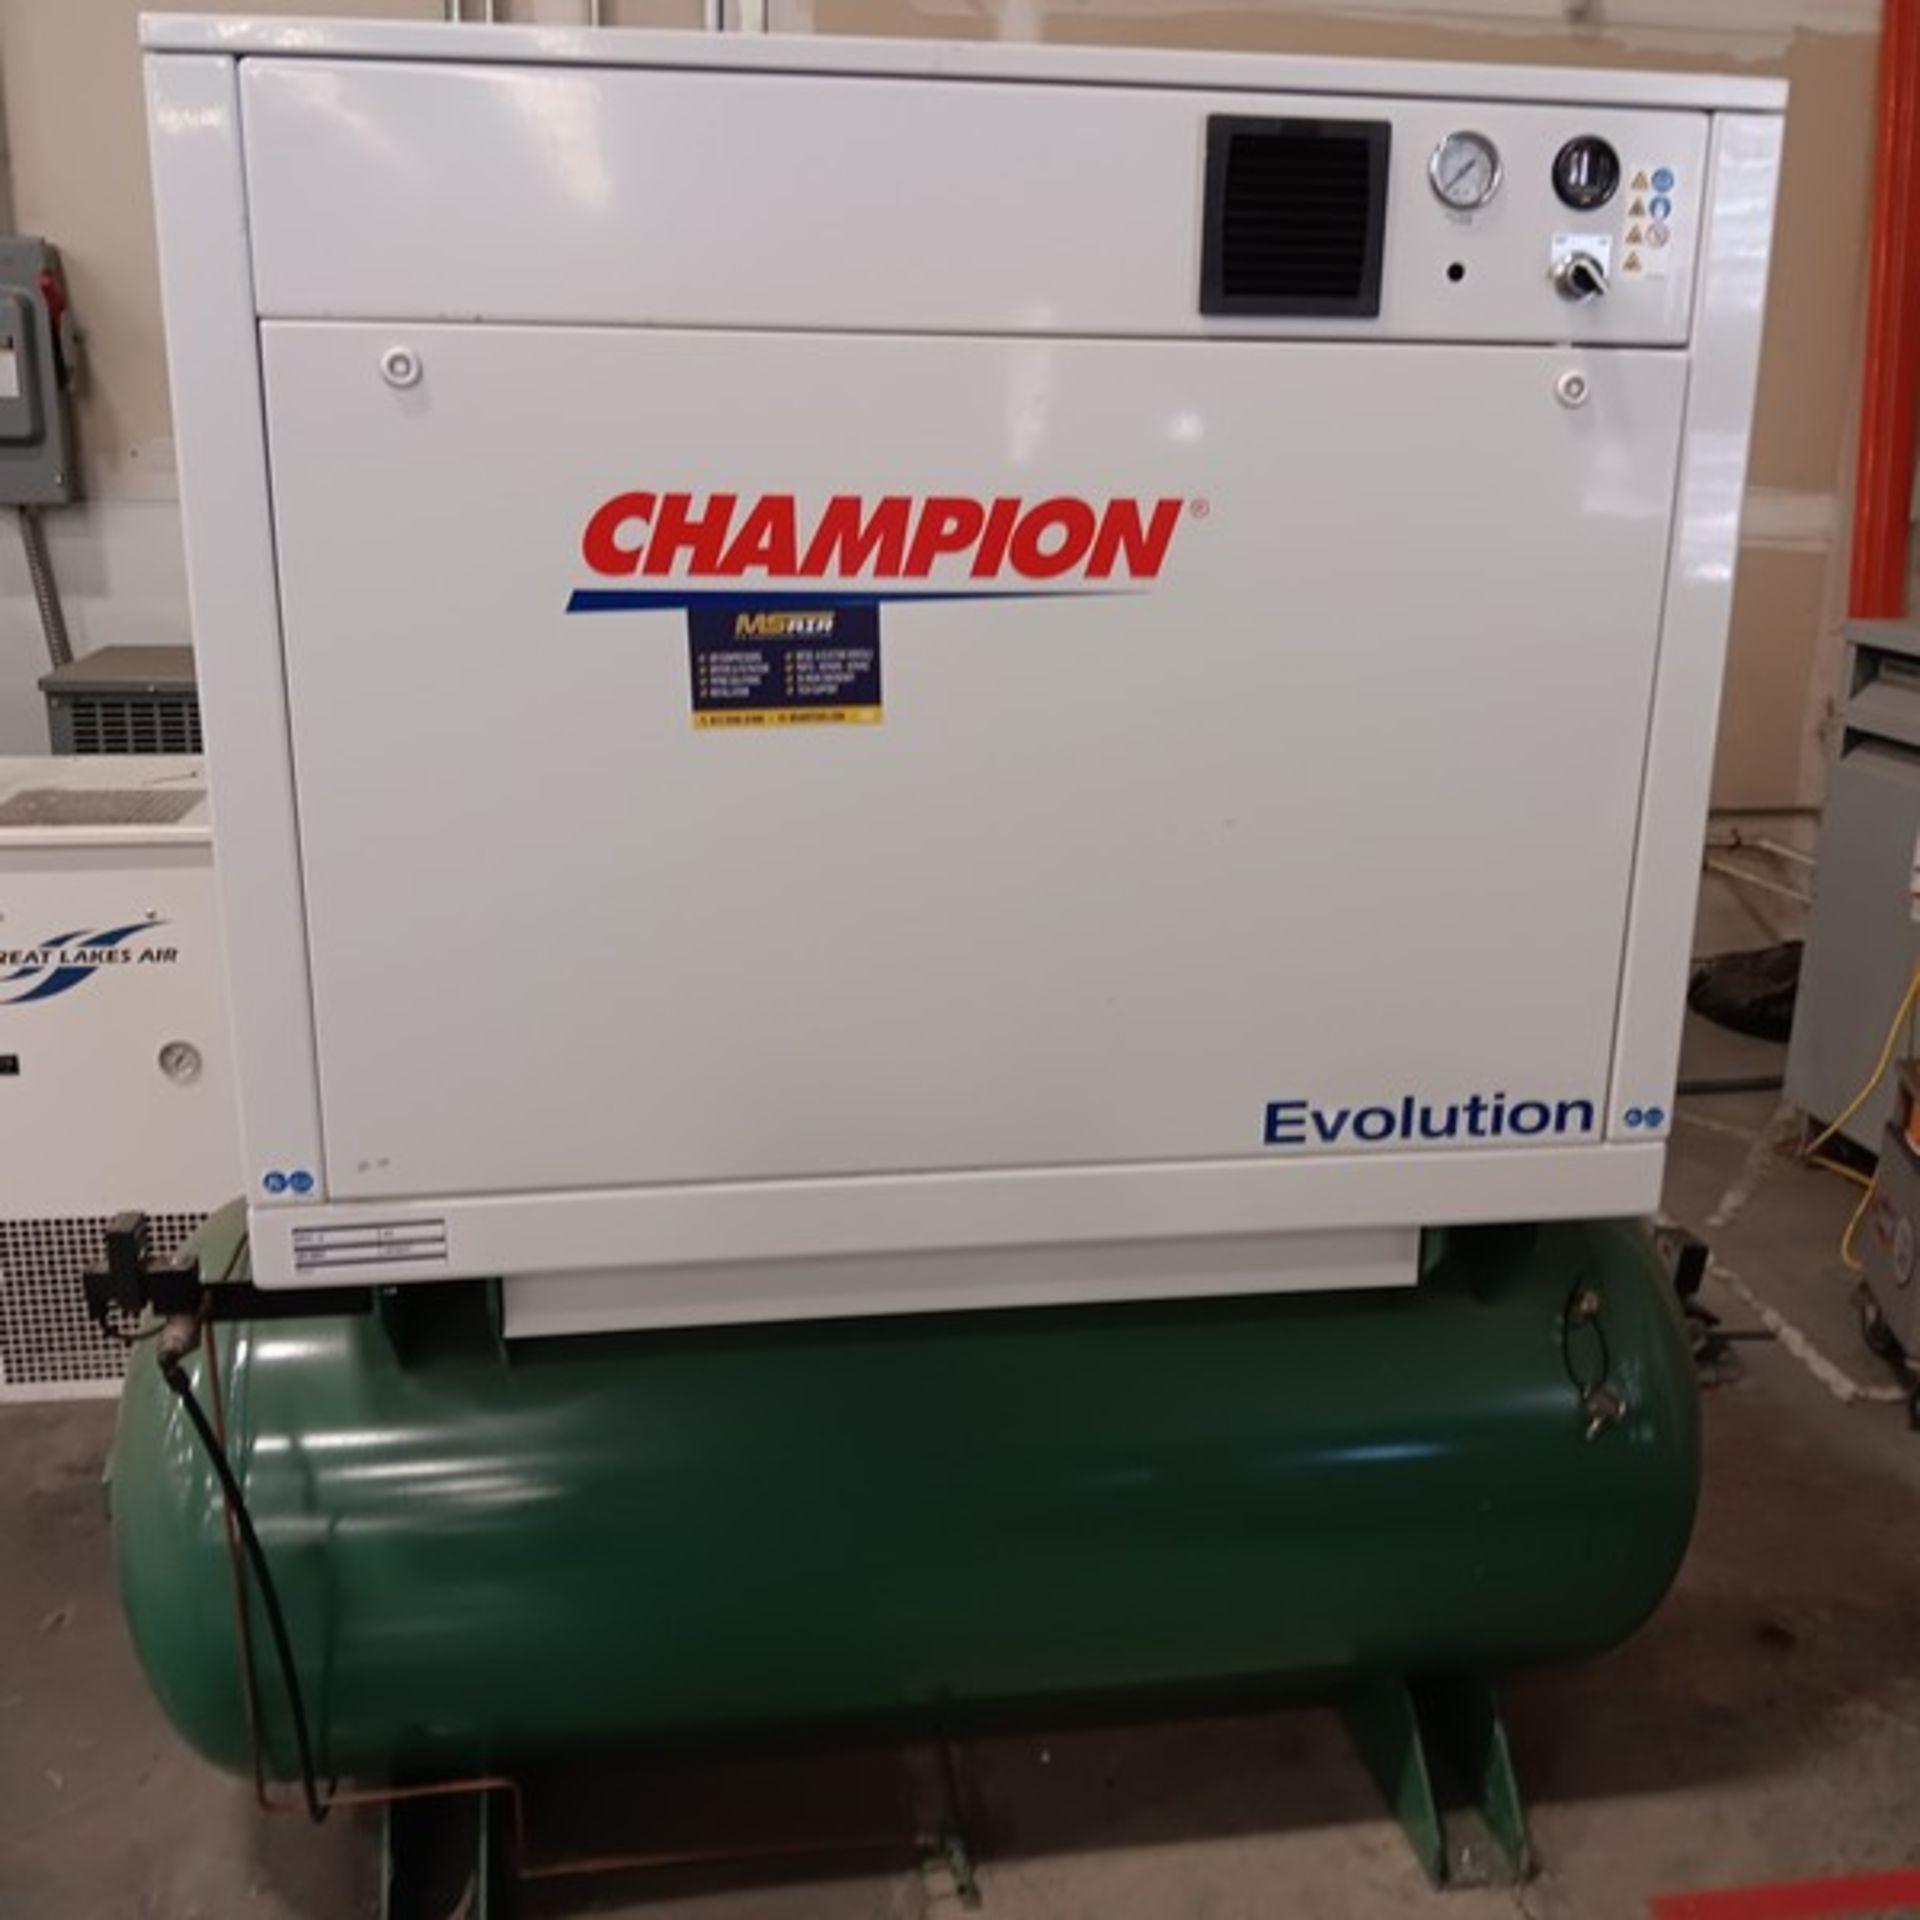 Champion Evolution Reciprocating Air Compressor, Model RP30, S/N D213691, Volt 230, Phase 3